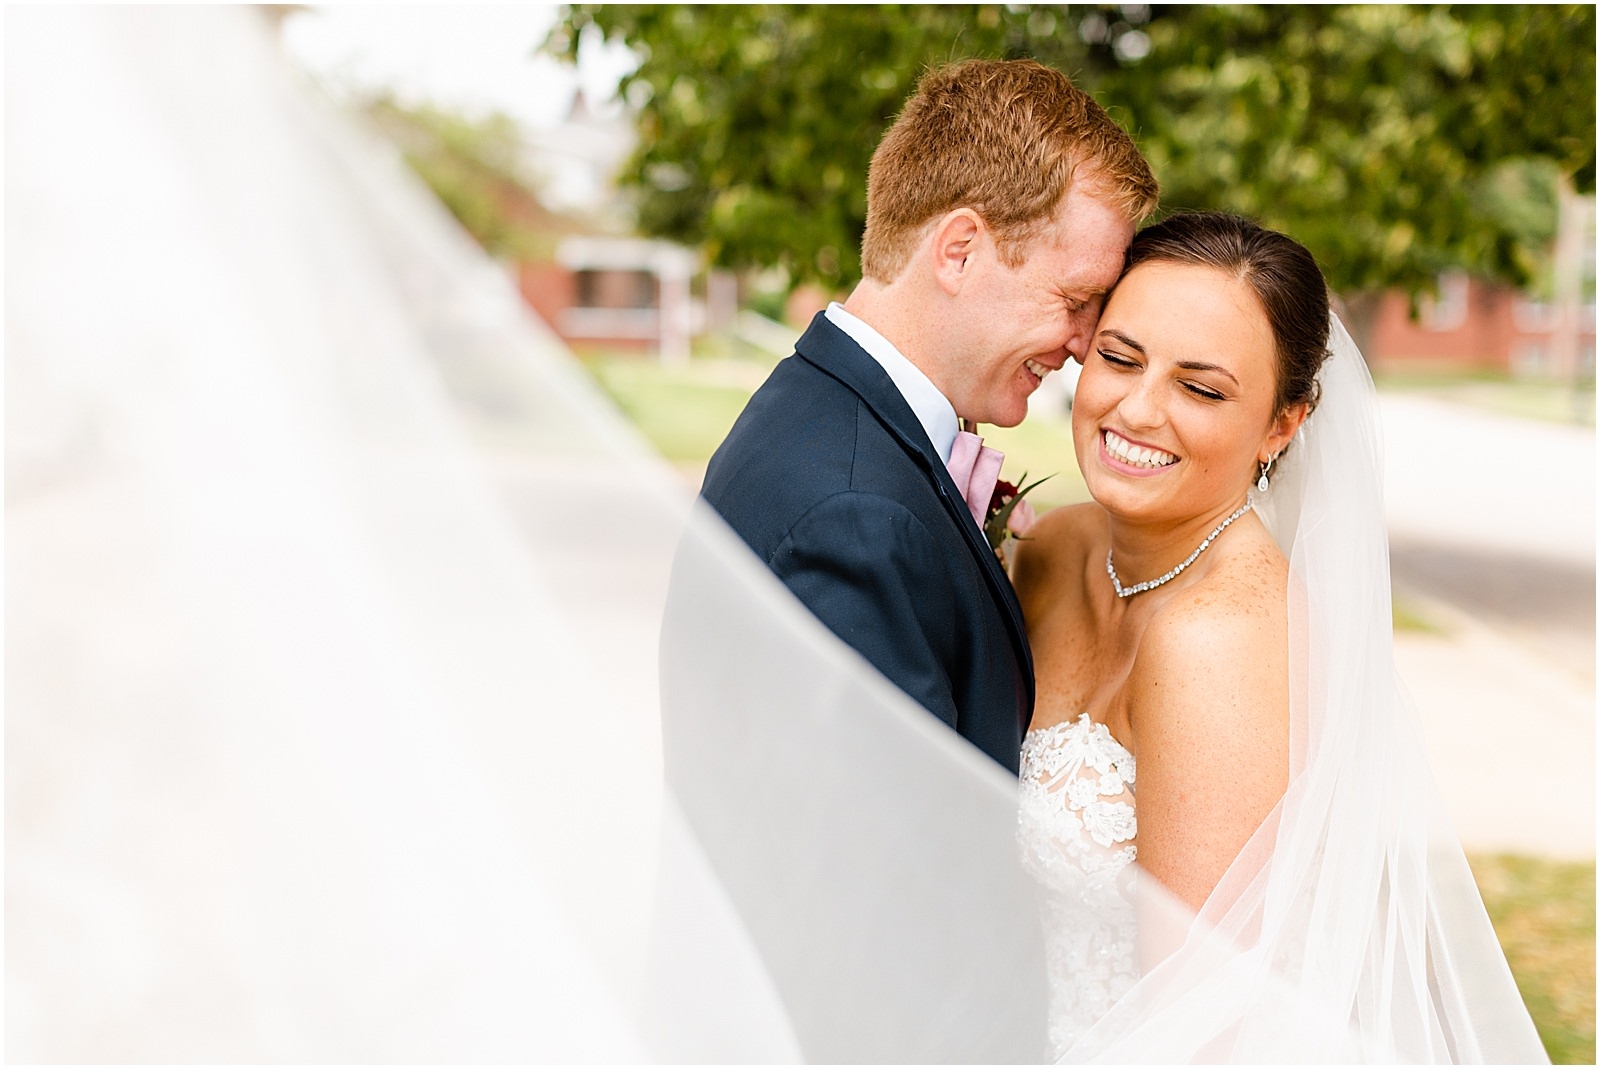 Deidra and Andrew | A Huntingburgh Indiana Wedding Bret and Brandie | Evansville Photographers | @bretandbrandie-0054.jpg